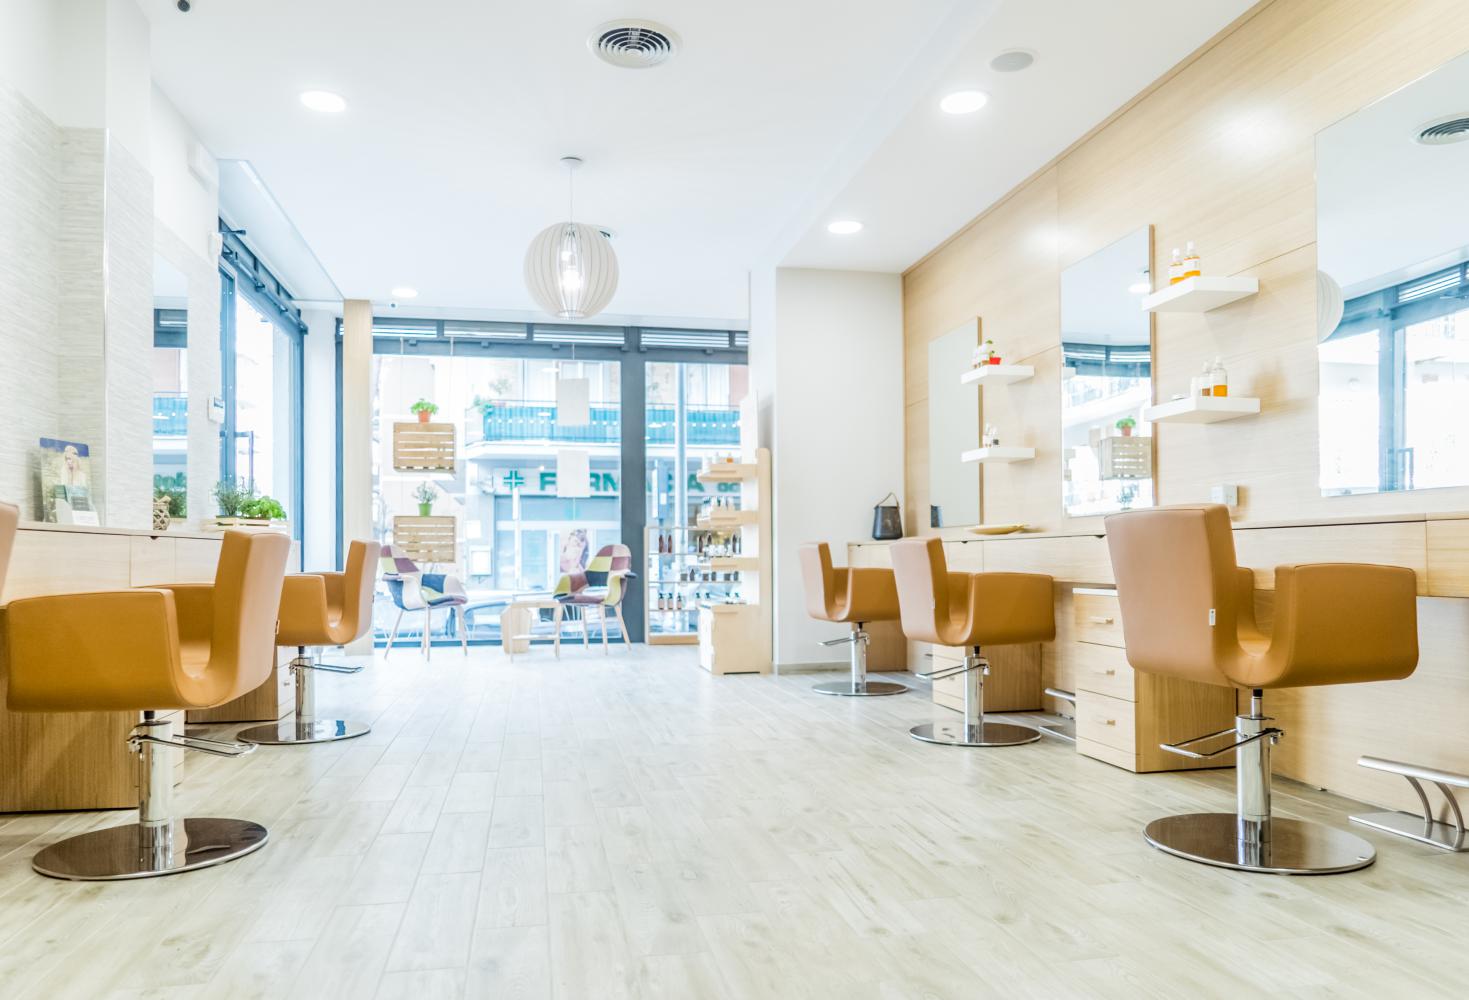 💚 HairStore Organic Salon, Parrucchiere BIO - Talenti - 2022 è su ROMA 💚  VEGANA